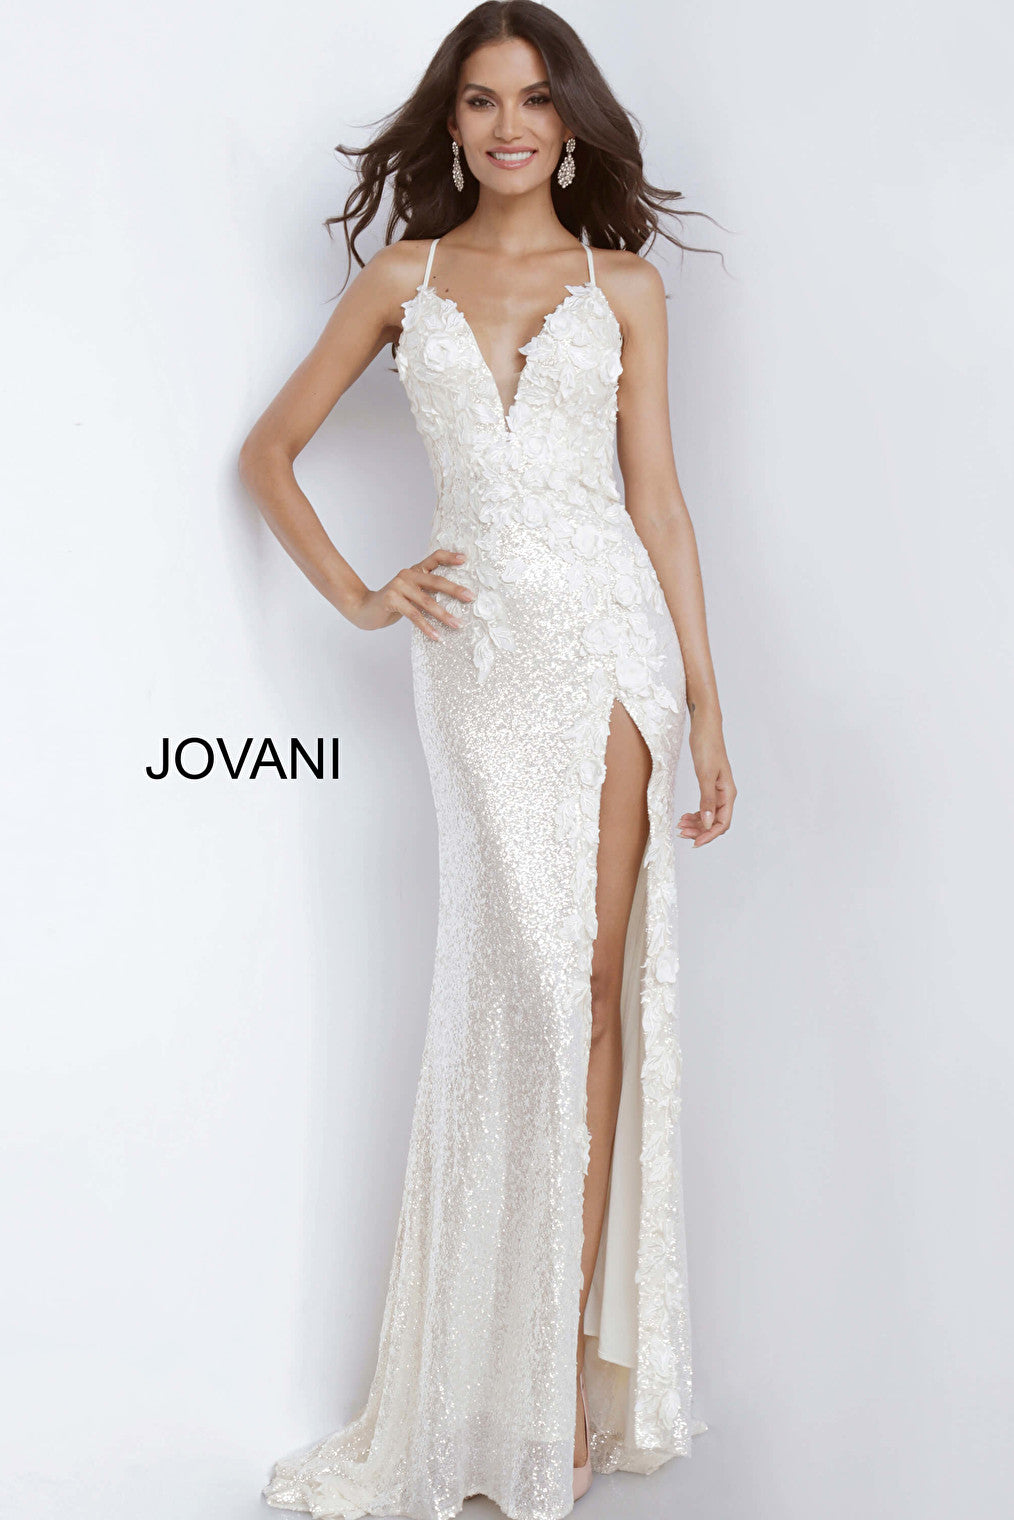 Jovani 1012 beaded dress